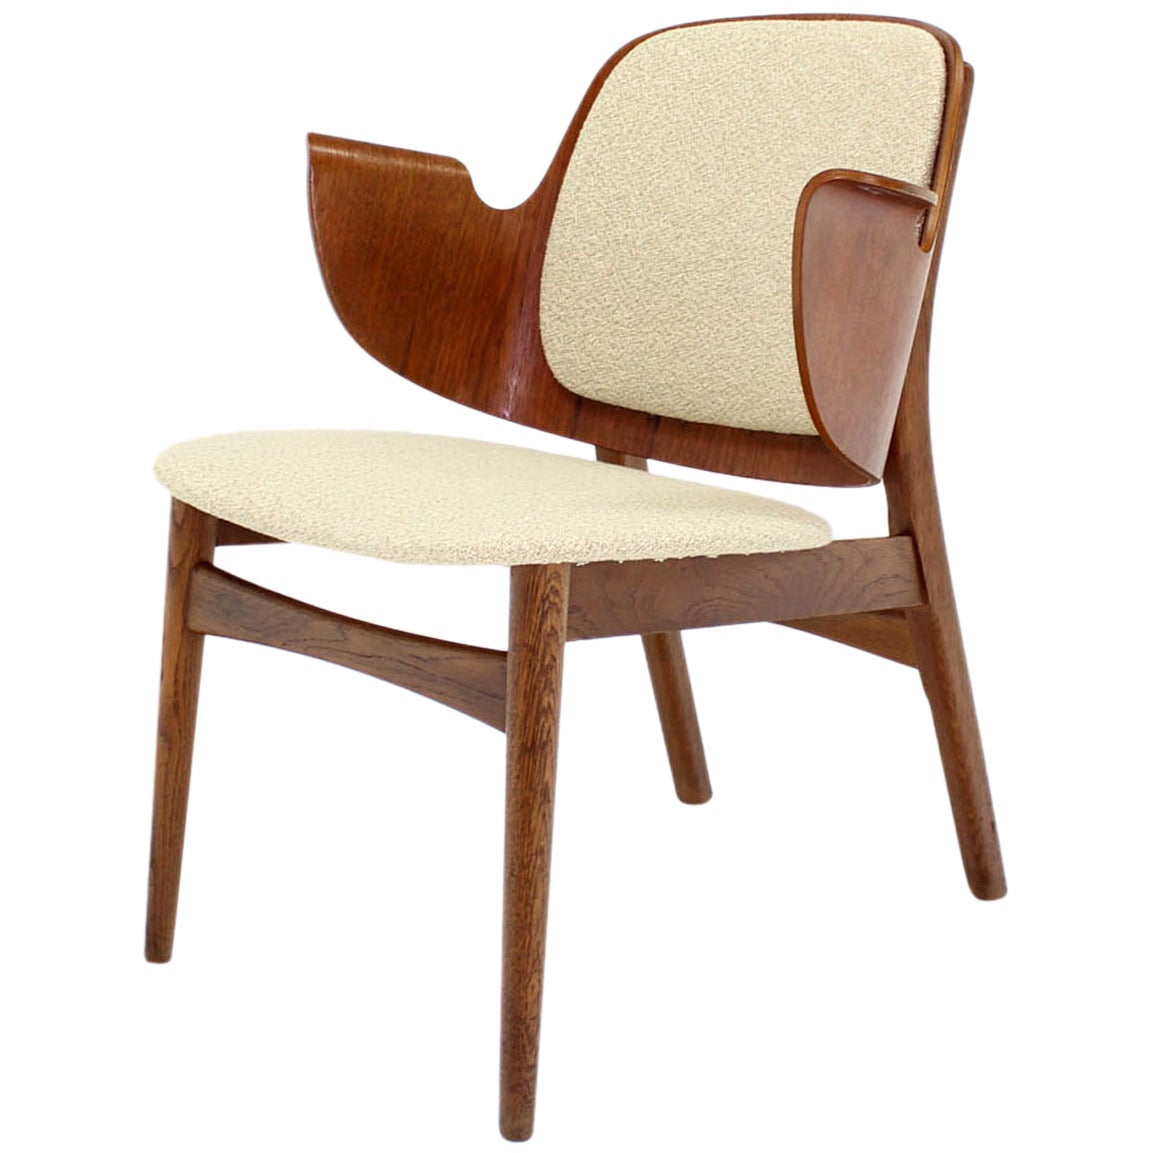 Moderner Sessel aus geformtem Sperrholz mit Fassrückenlehne, neu gepolstert.